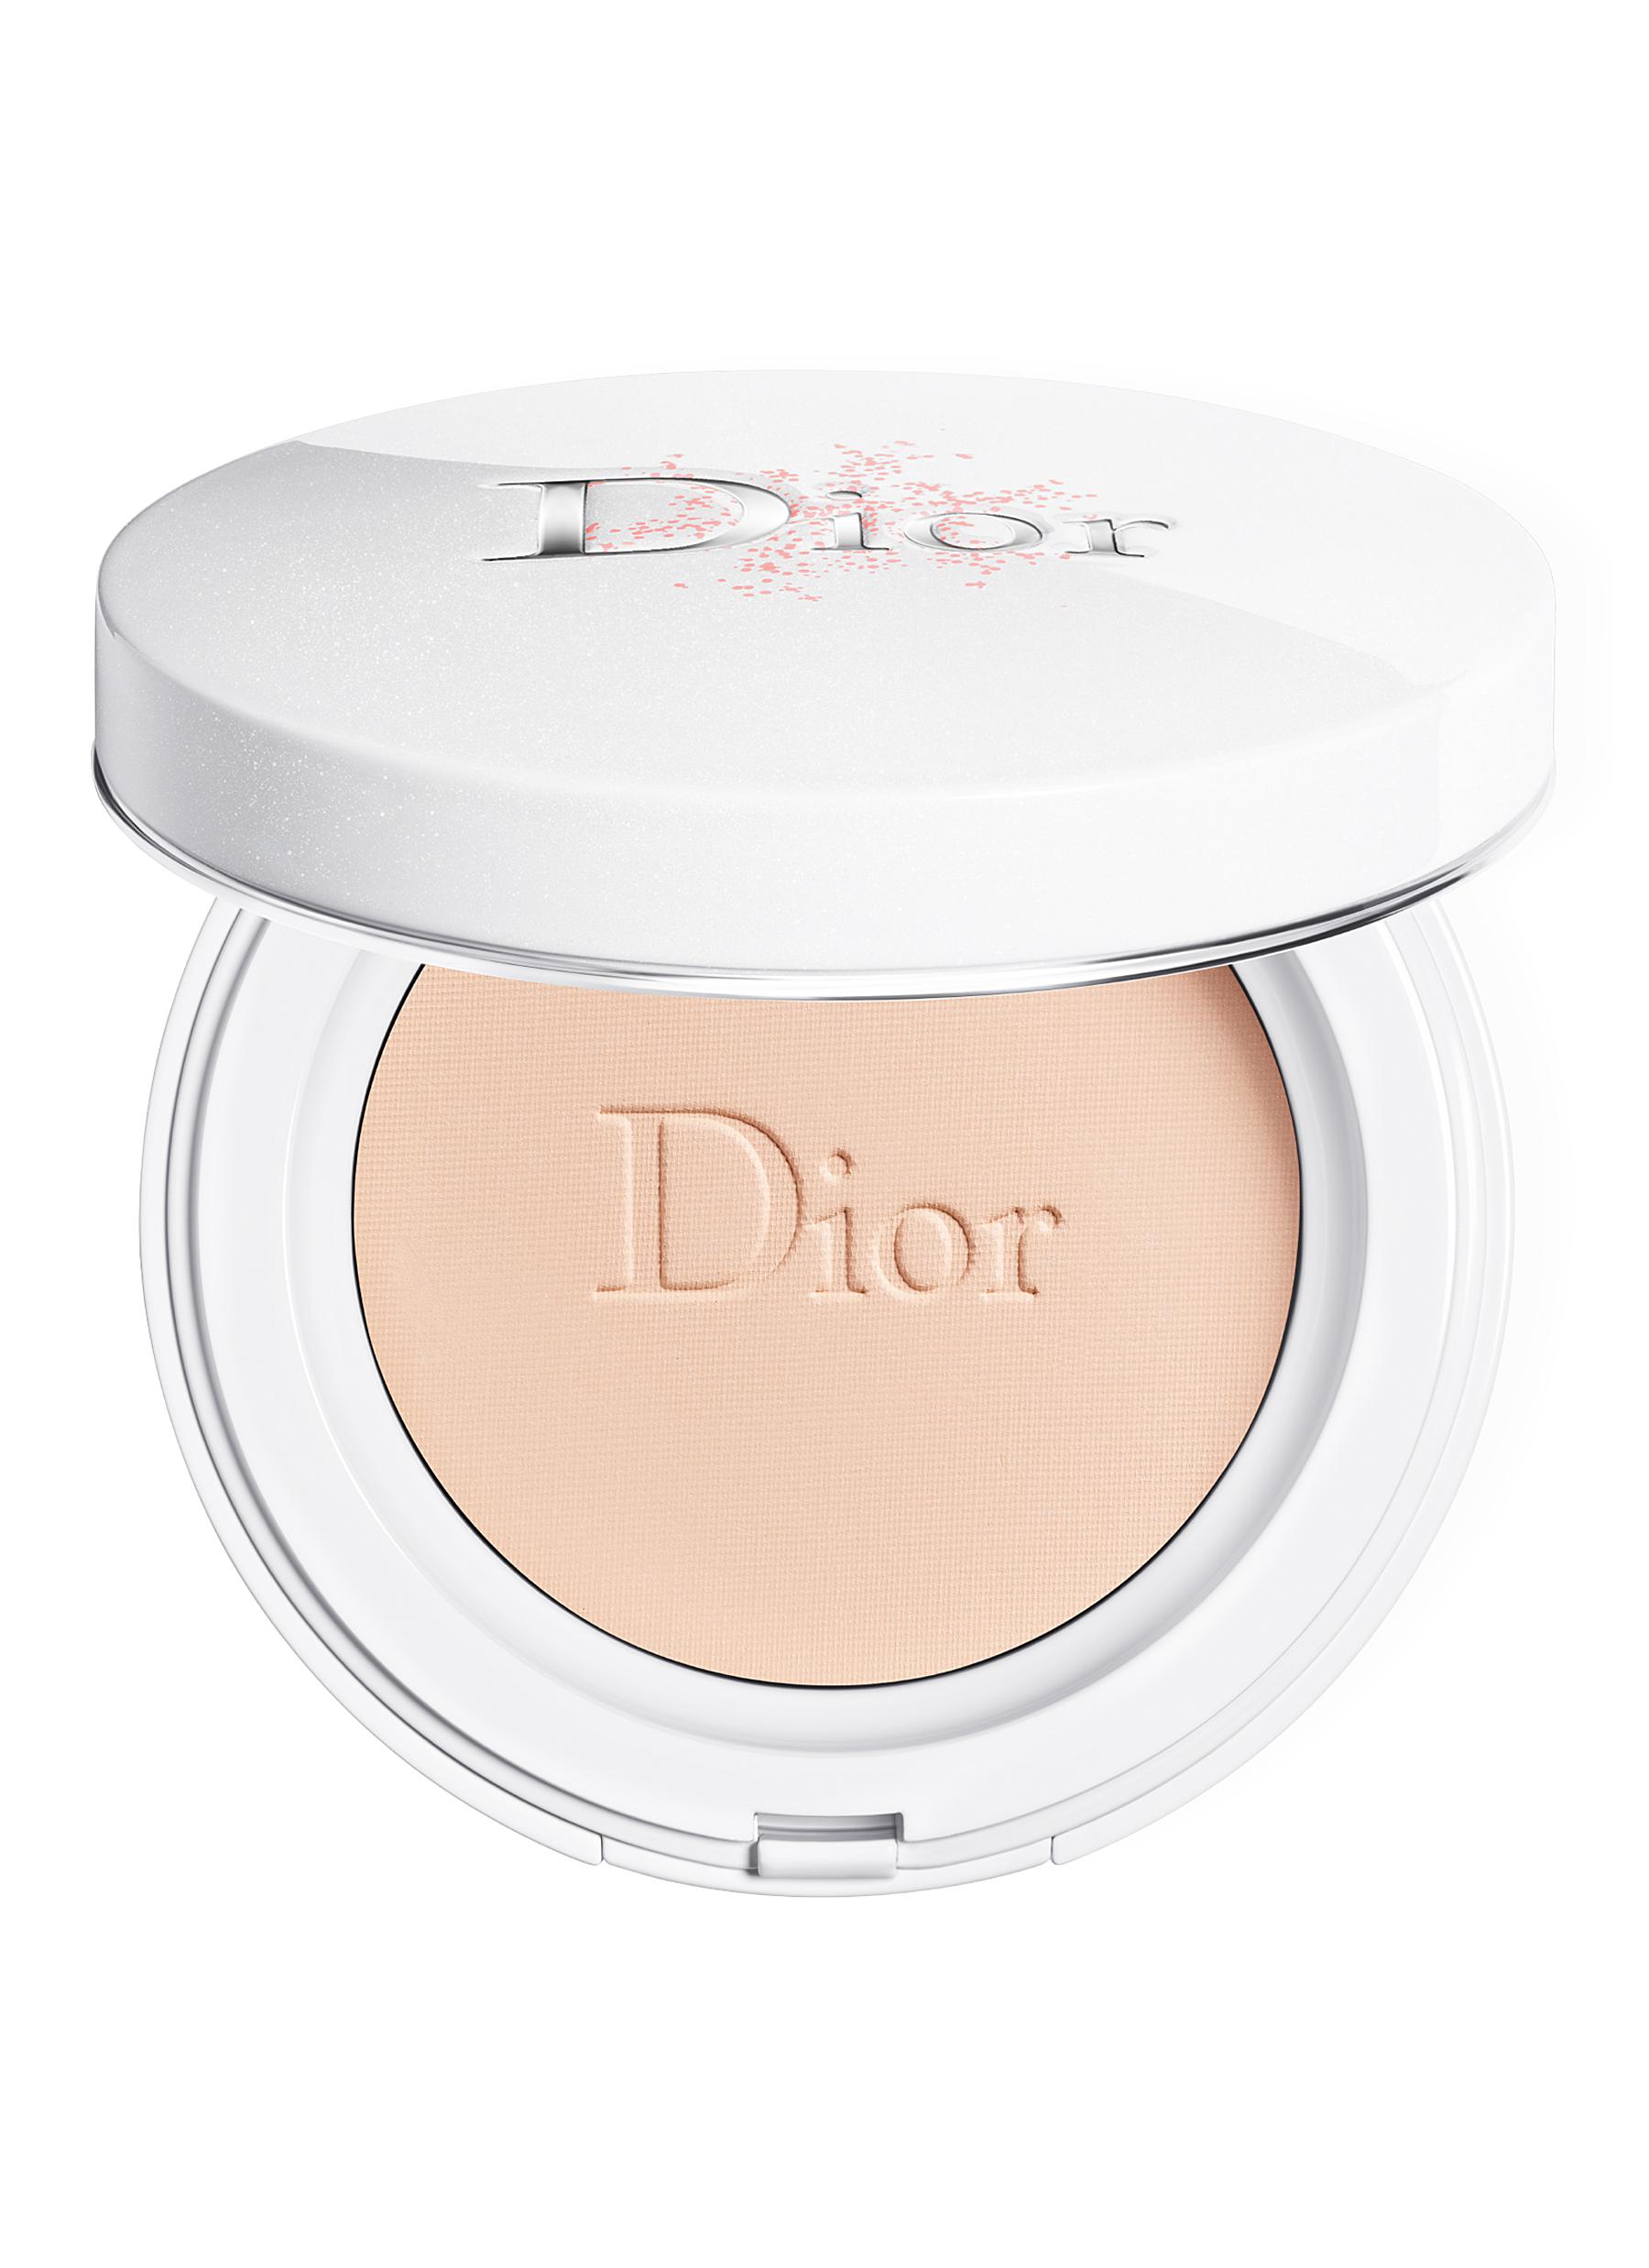 dior face powder compact